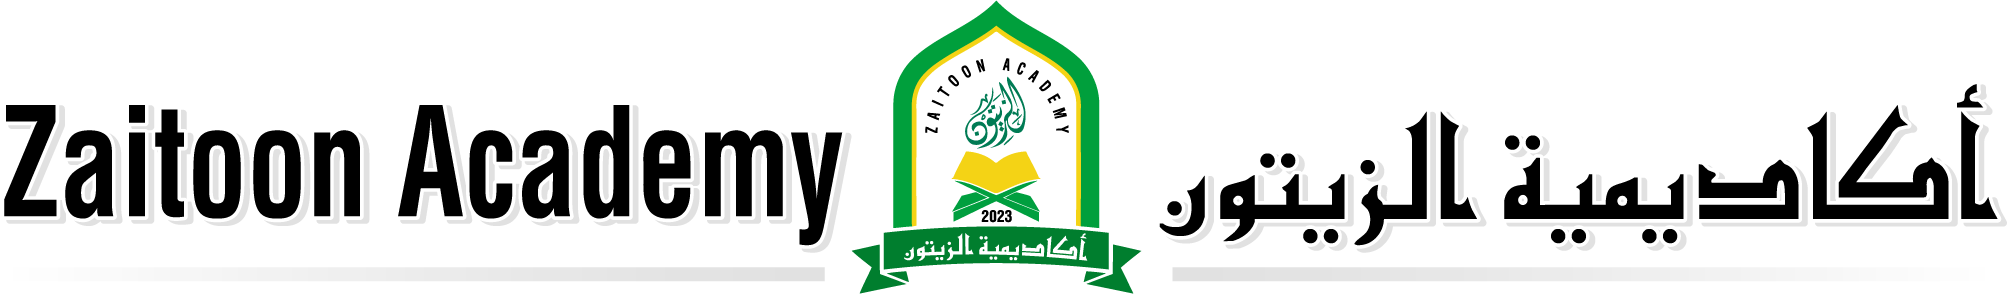 Zaitoon Academy